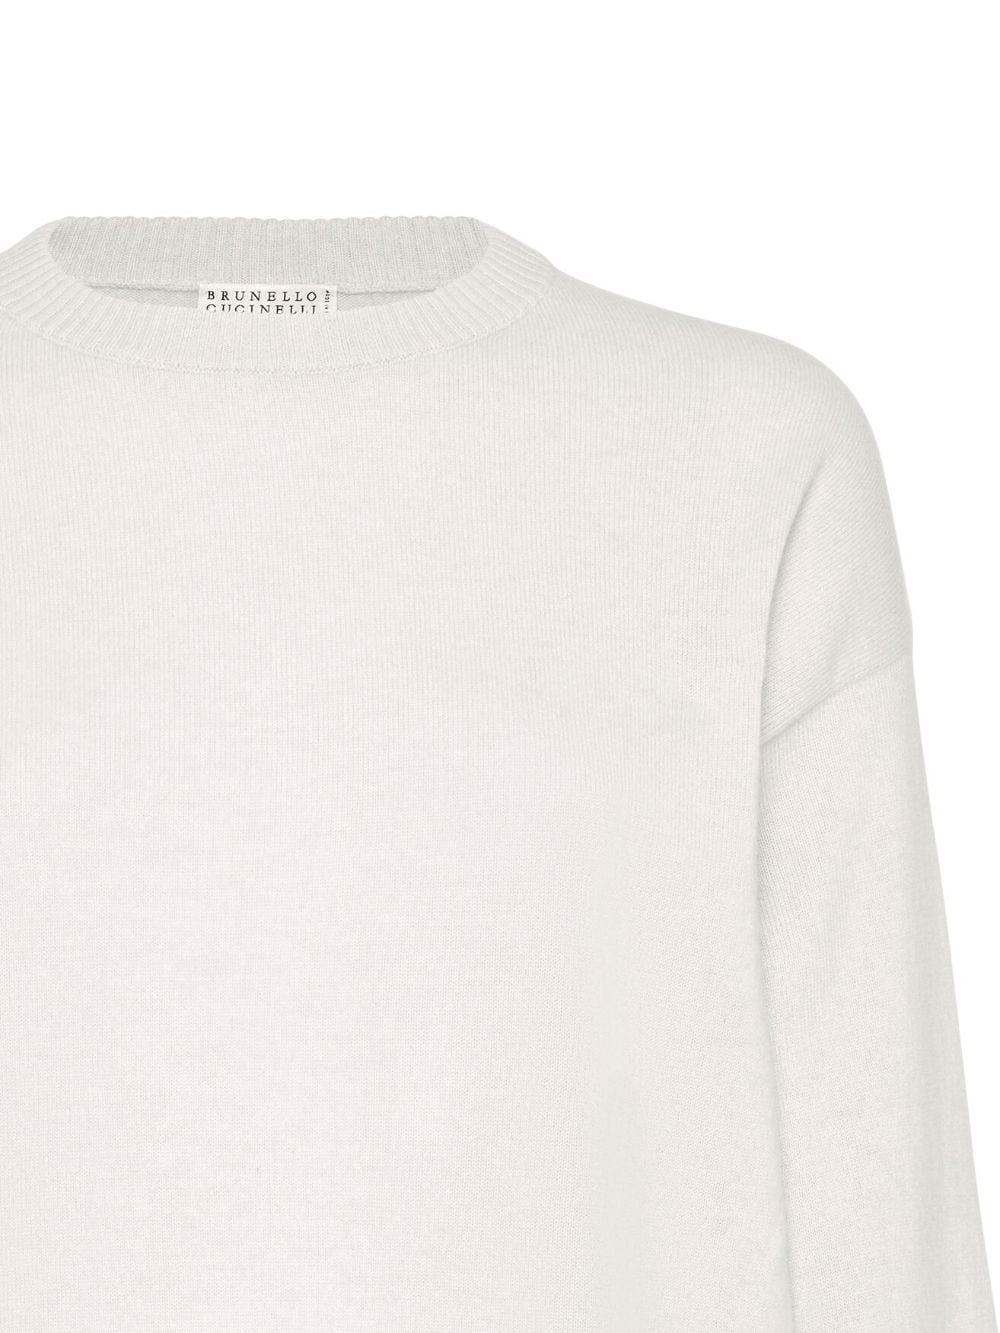 Brunello Cucinelli BRUNELLO CUCINELLI- Cashmere Sweater With Shiny Details